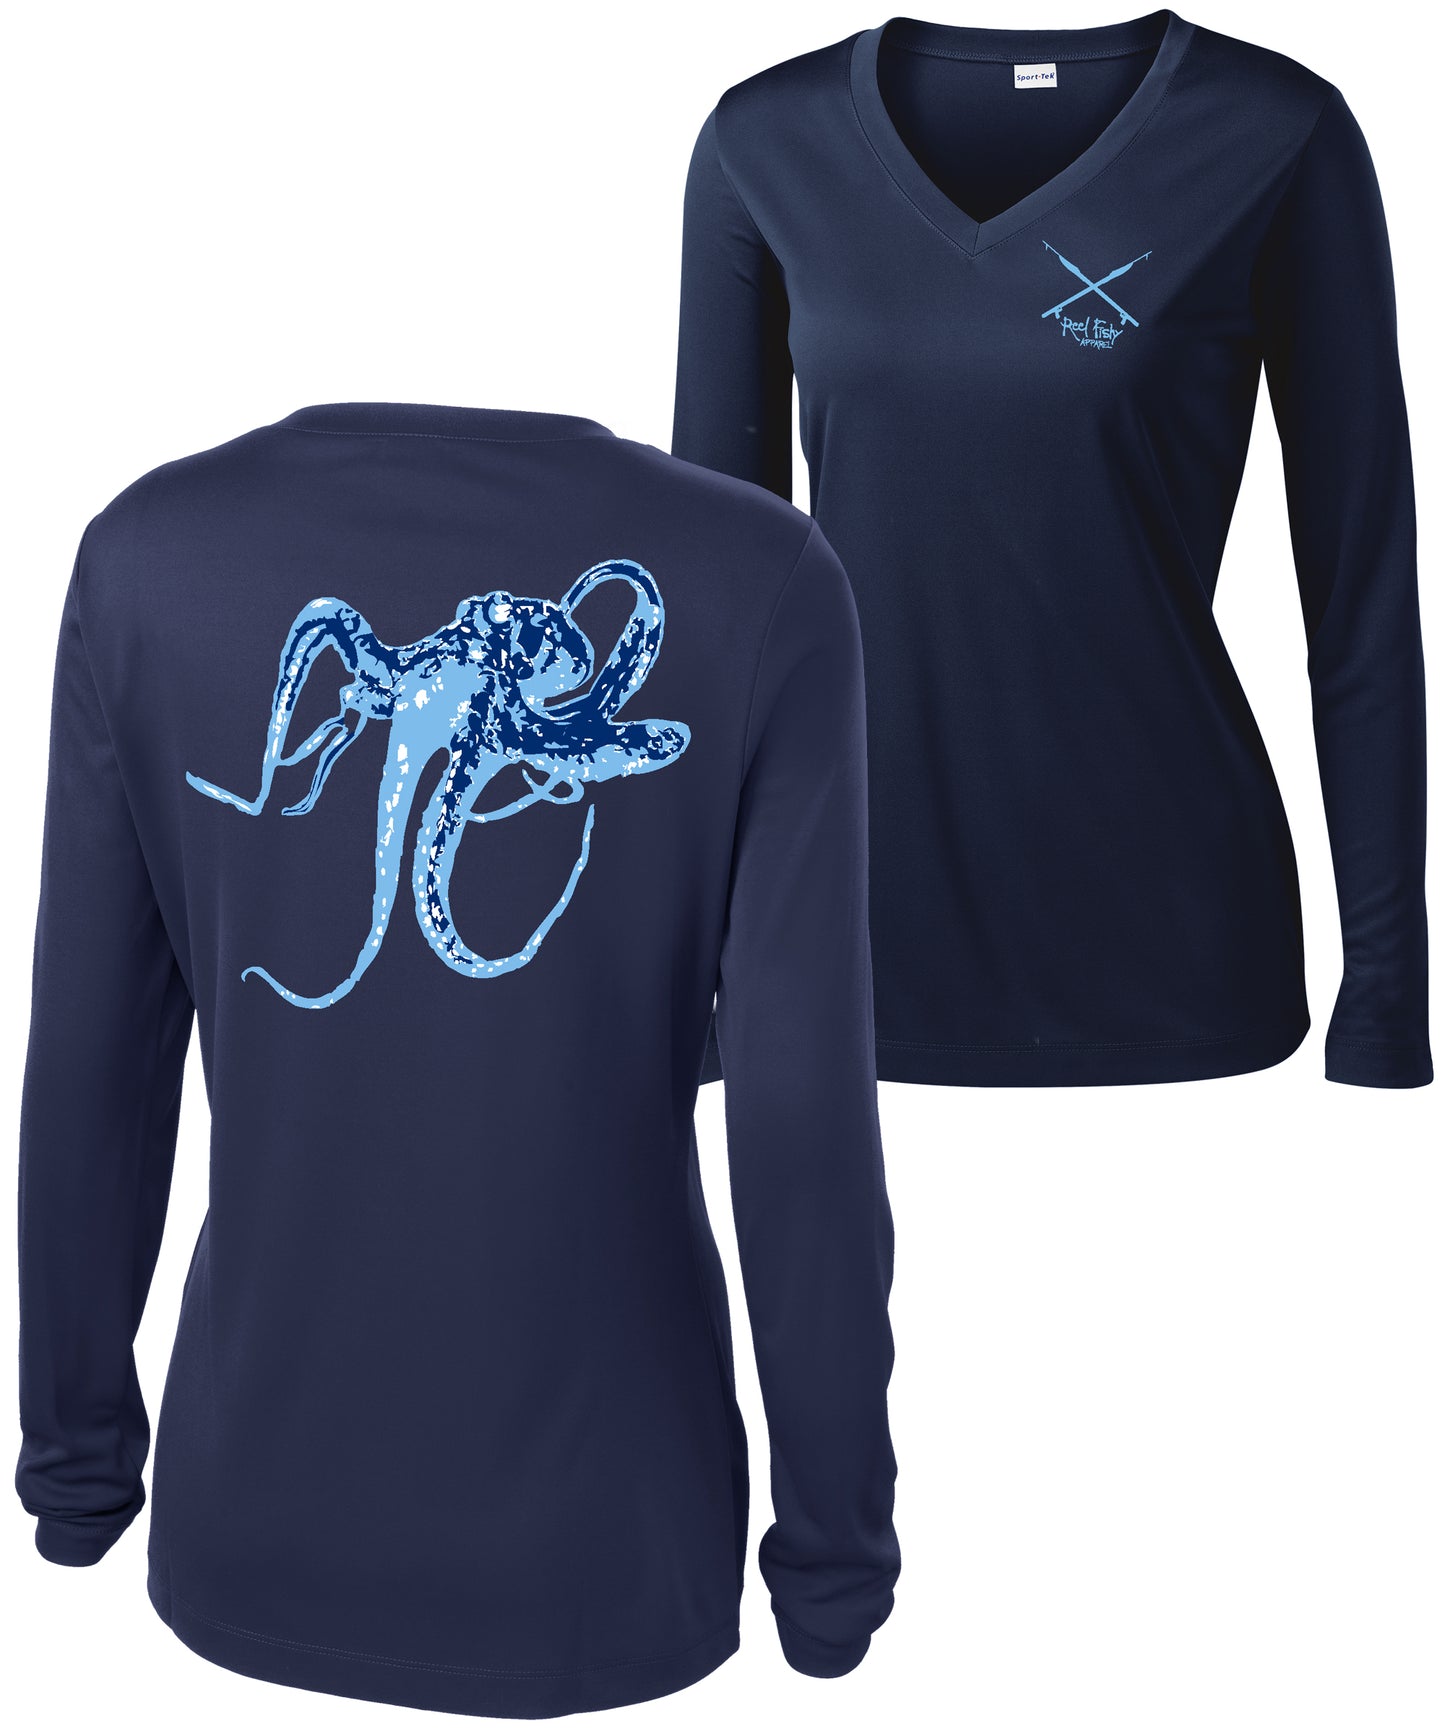 Ladies Octopus Performance Dry-Fit V-neck Long Sleeve - Navy w/Lt Blue logo